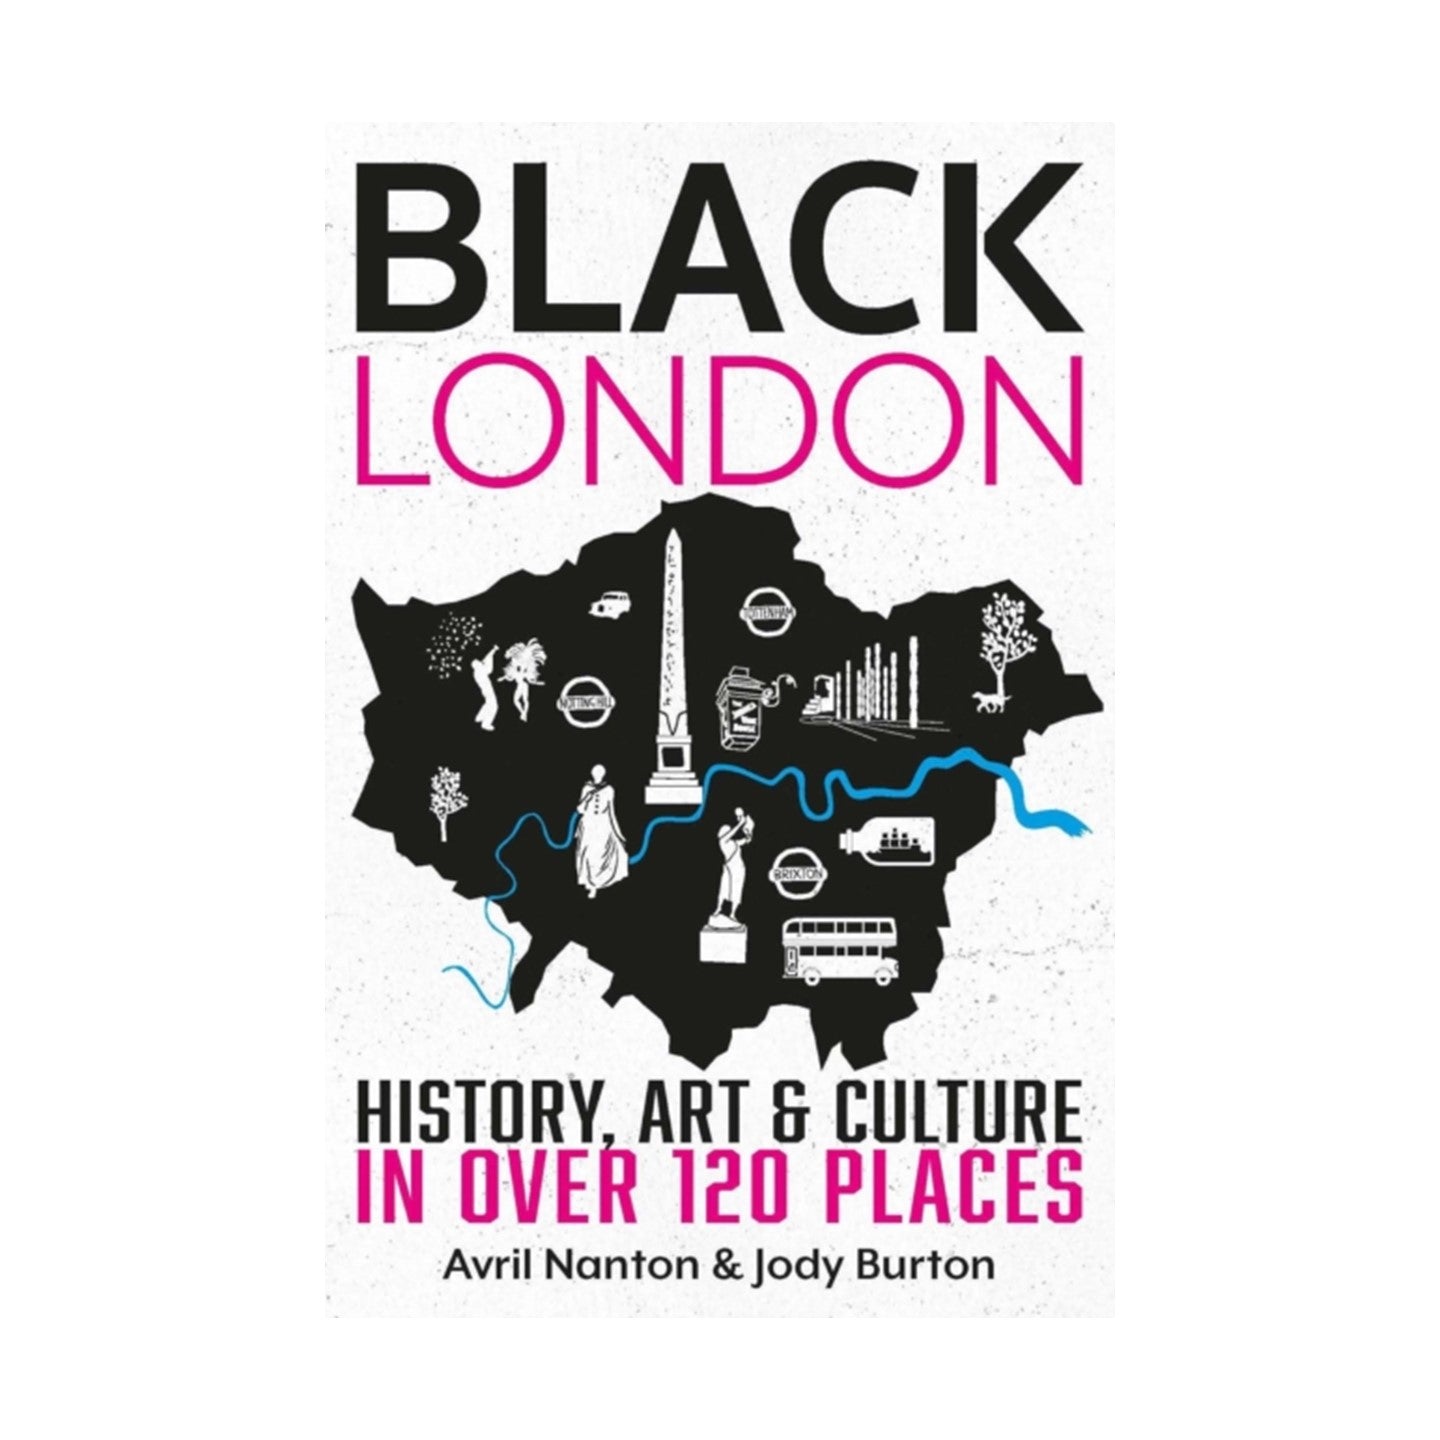 Black London: History, Art & Culture